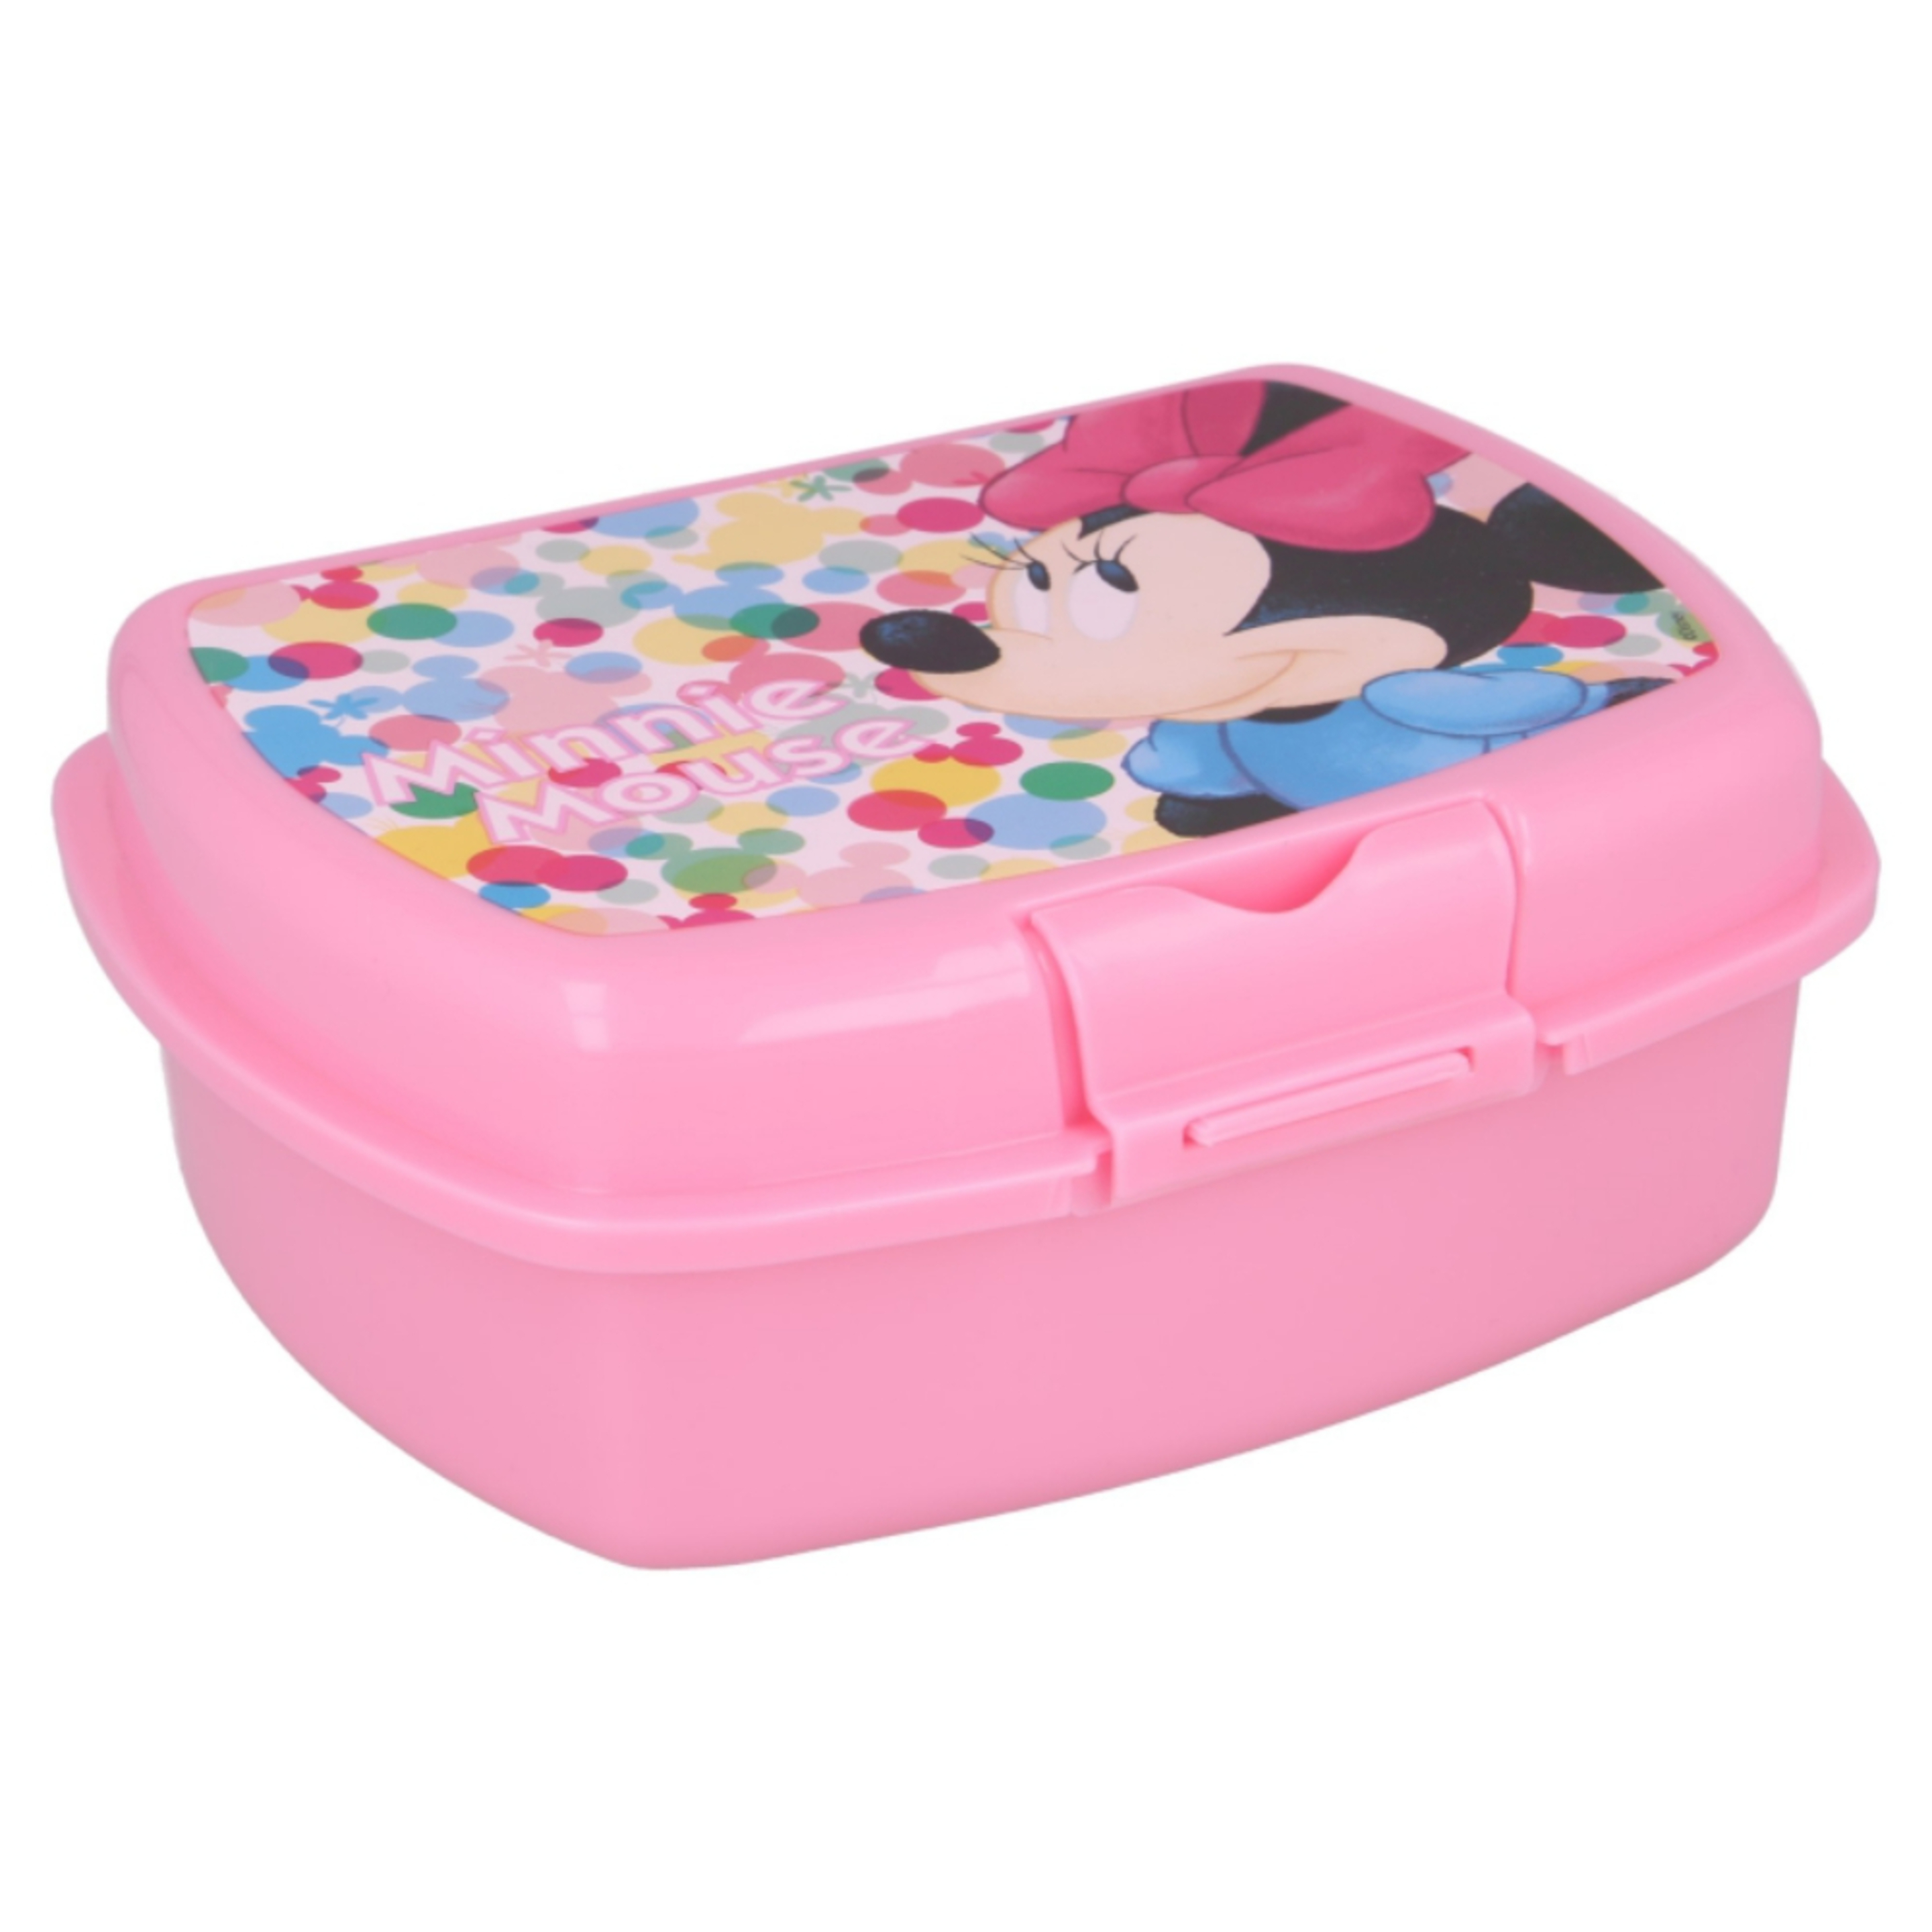 Sandwichera Minnie Mouse 65987 - rosa - 